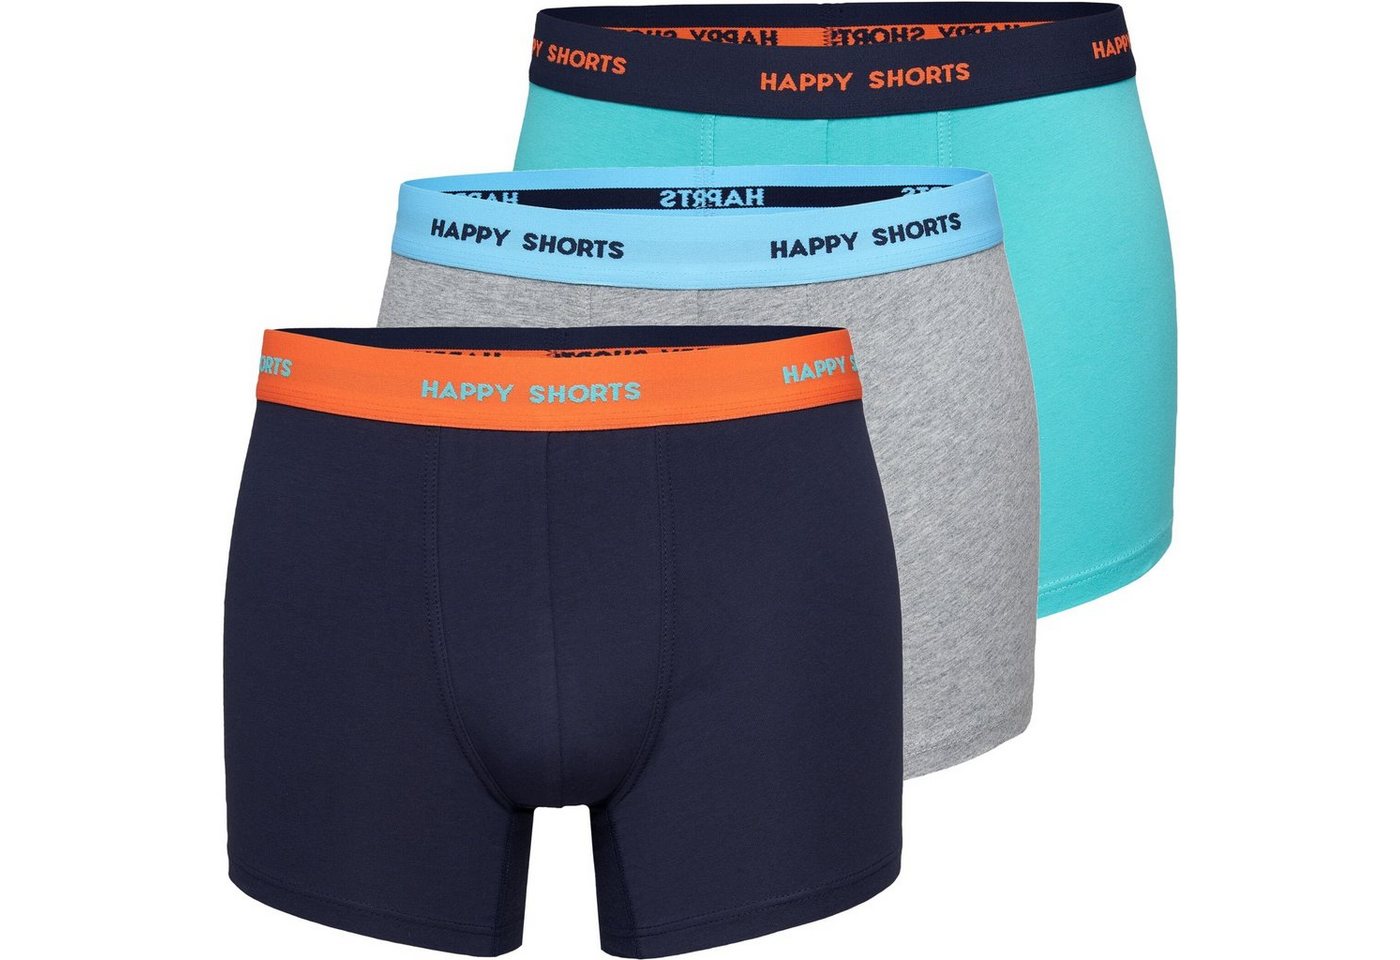 HAPPY SHORTS Boxershorts 3 Stück Happy Shorts Jersey Trunk Herren Boxer Pant orange grau türkis (1-St) von HAPPY SHORTS